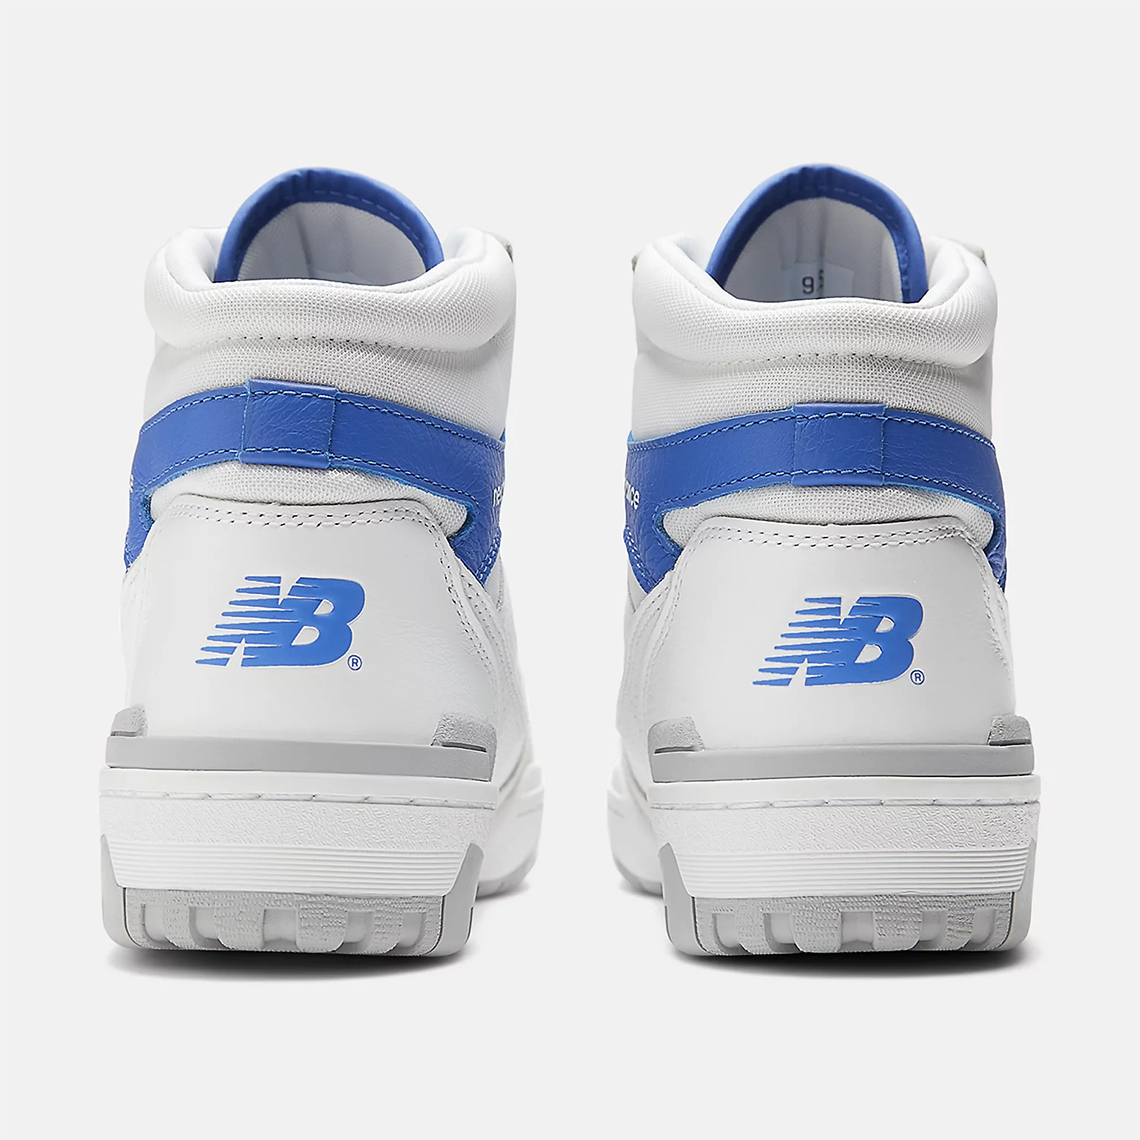 First Look At The Nike LeBron 22 White Marine Blue Angora Bb650rwi 2